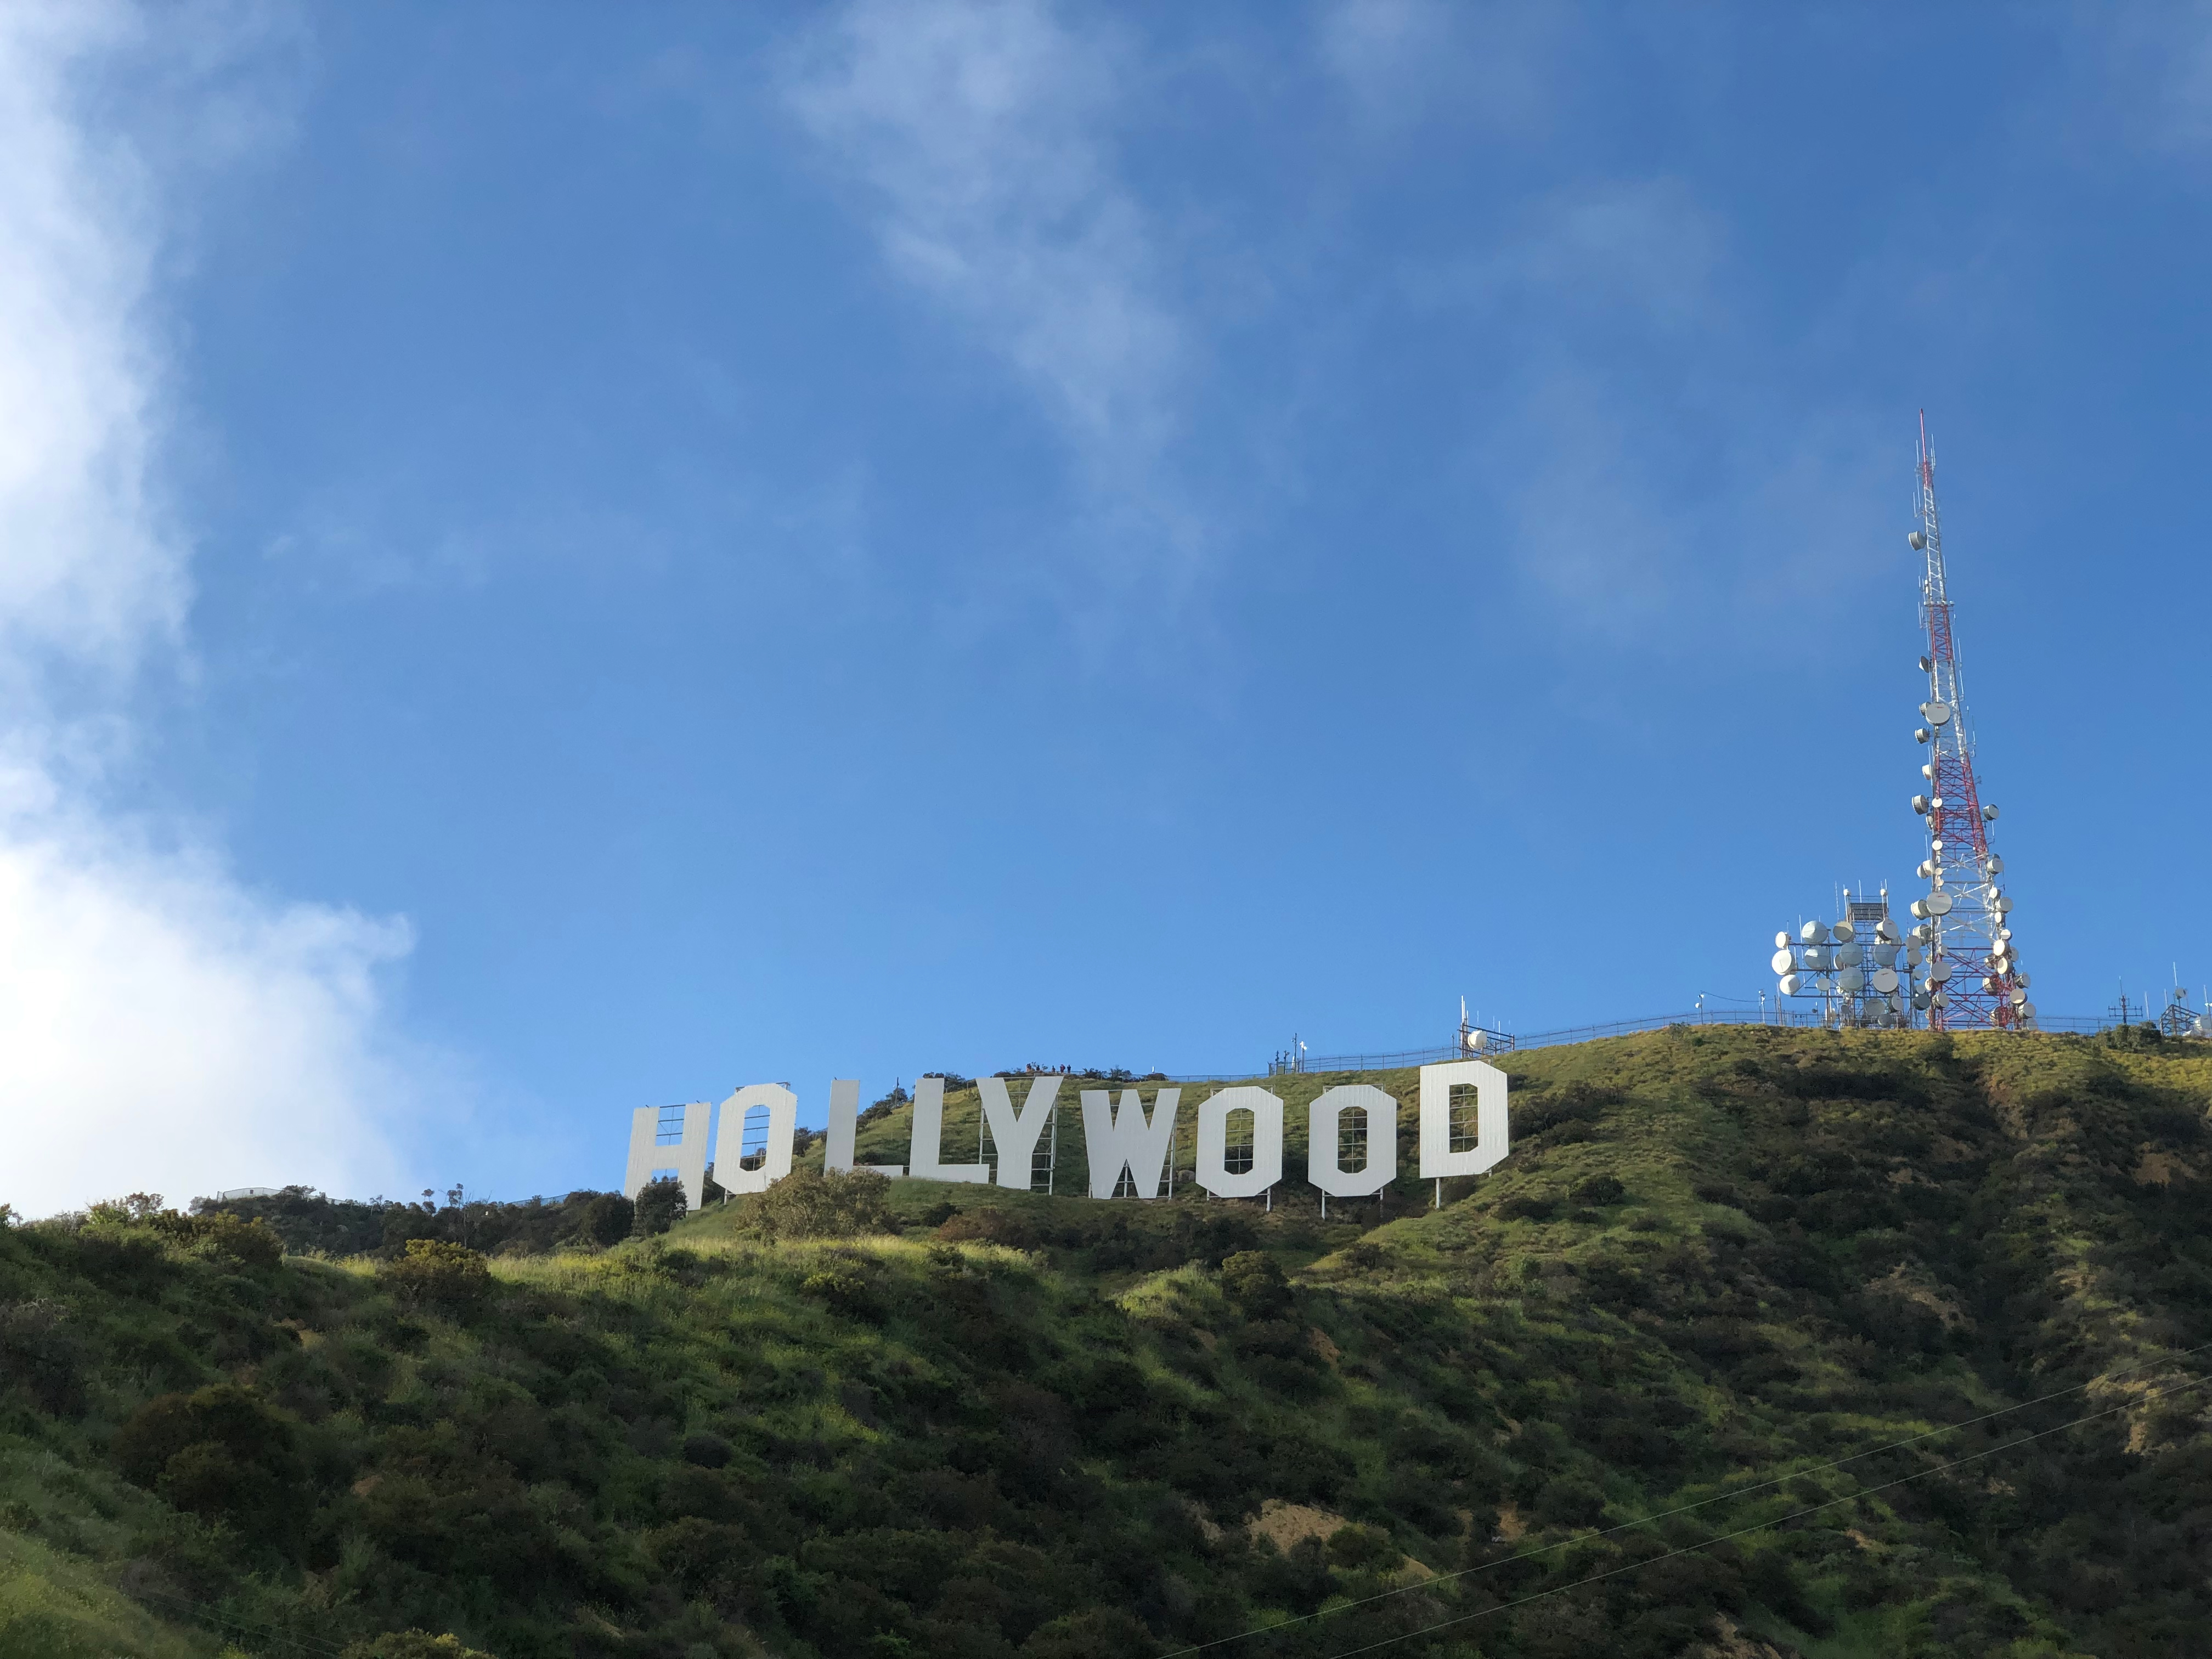 Blick auf das Hollywood Sign